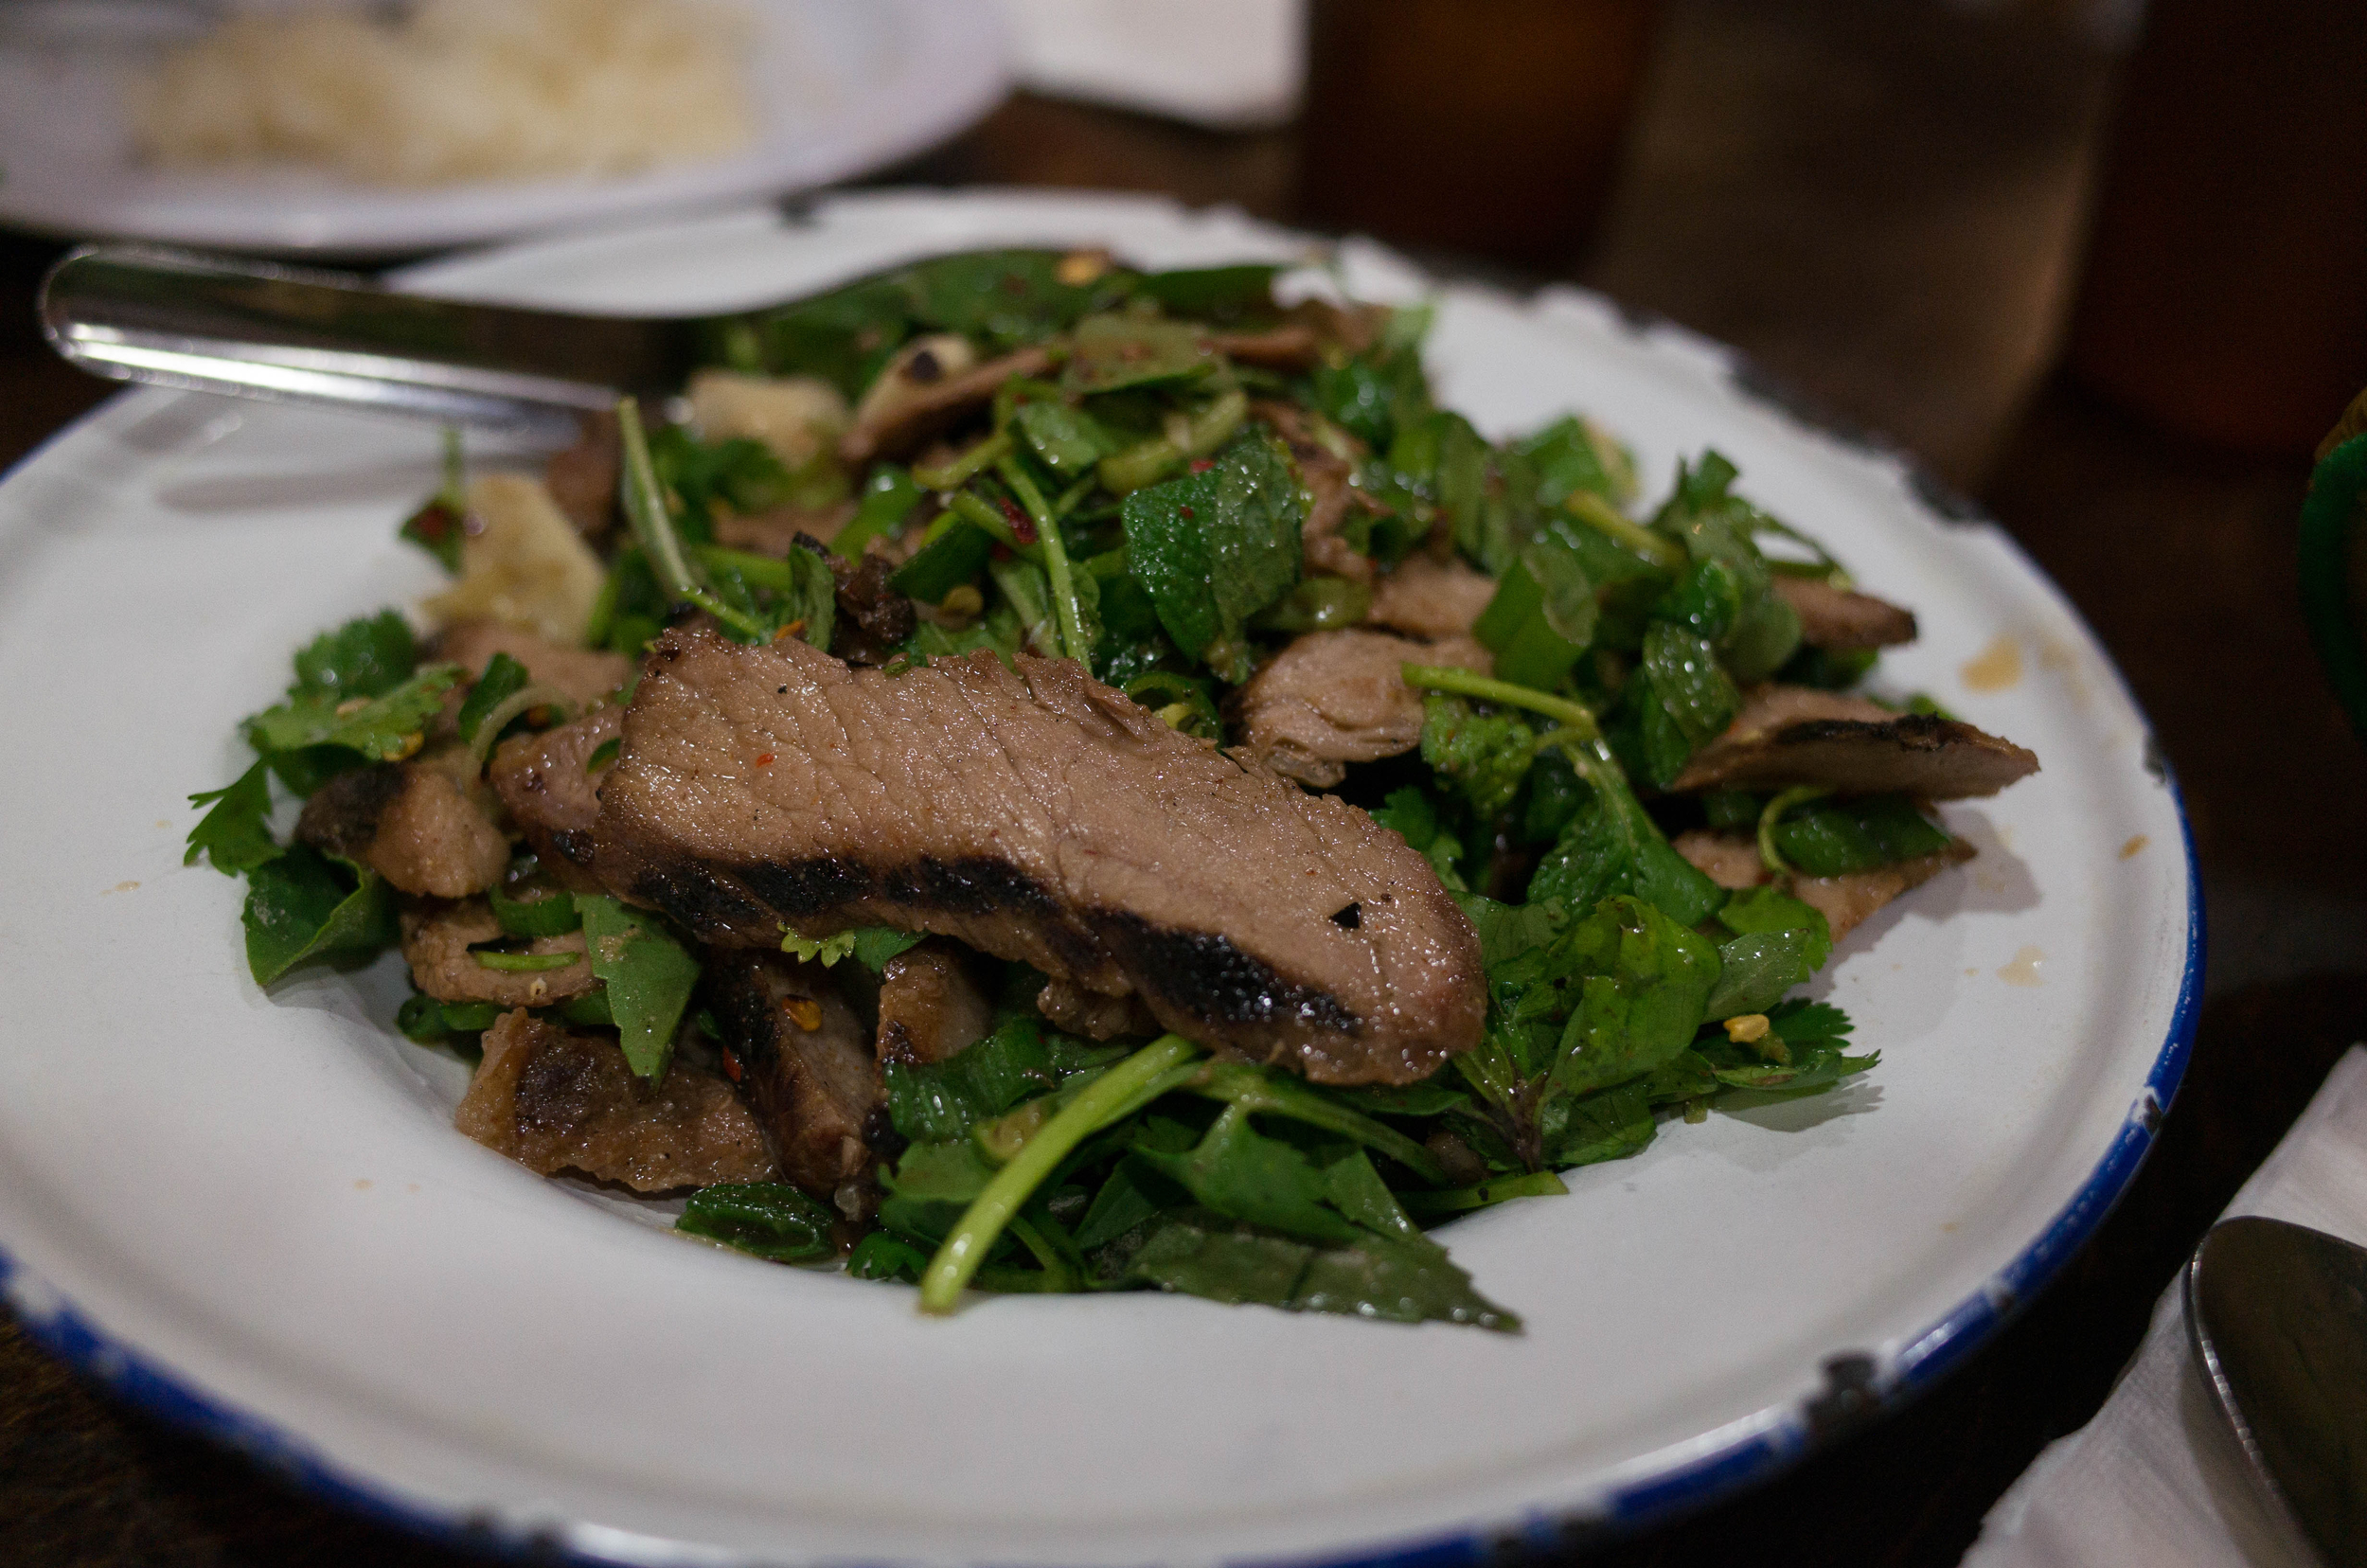  Best named dish of the night: The Startled Pig pork salad. 